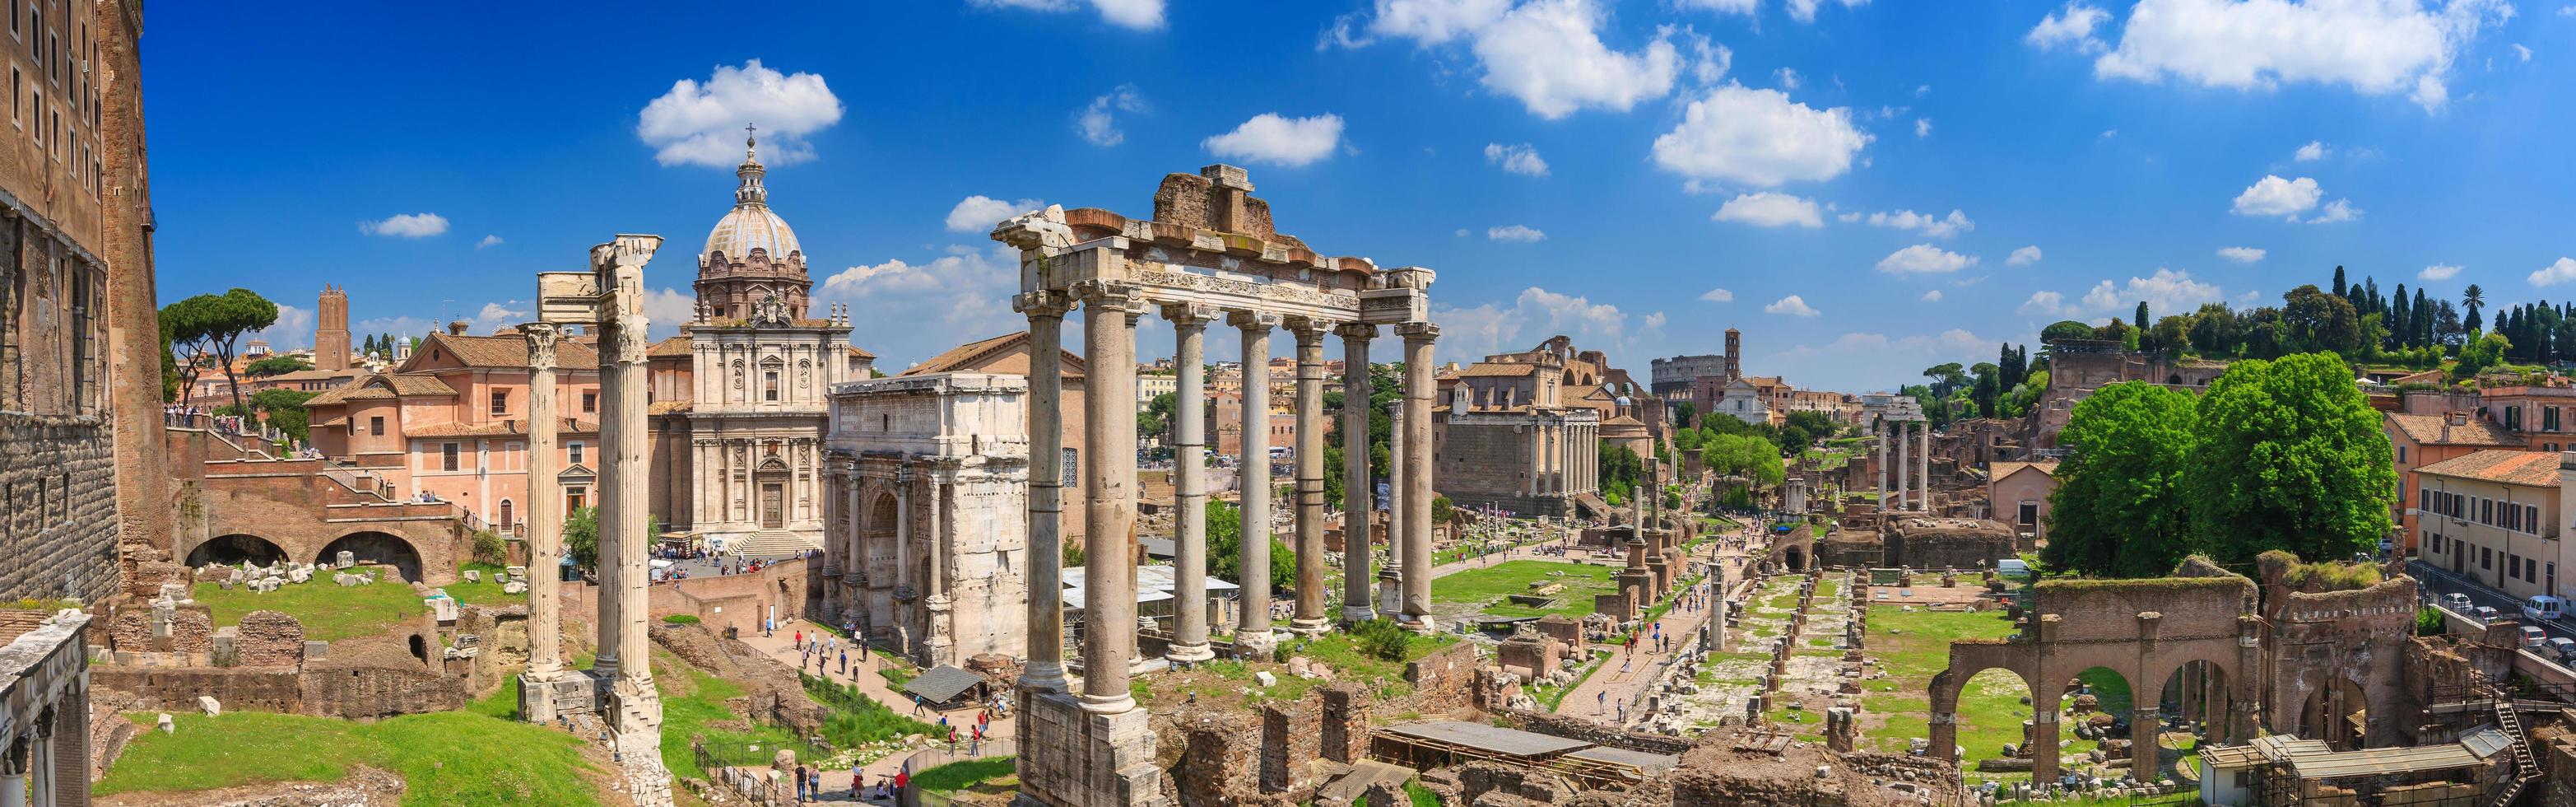 forum romain à rome photo